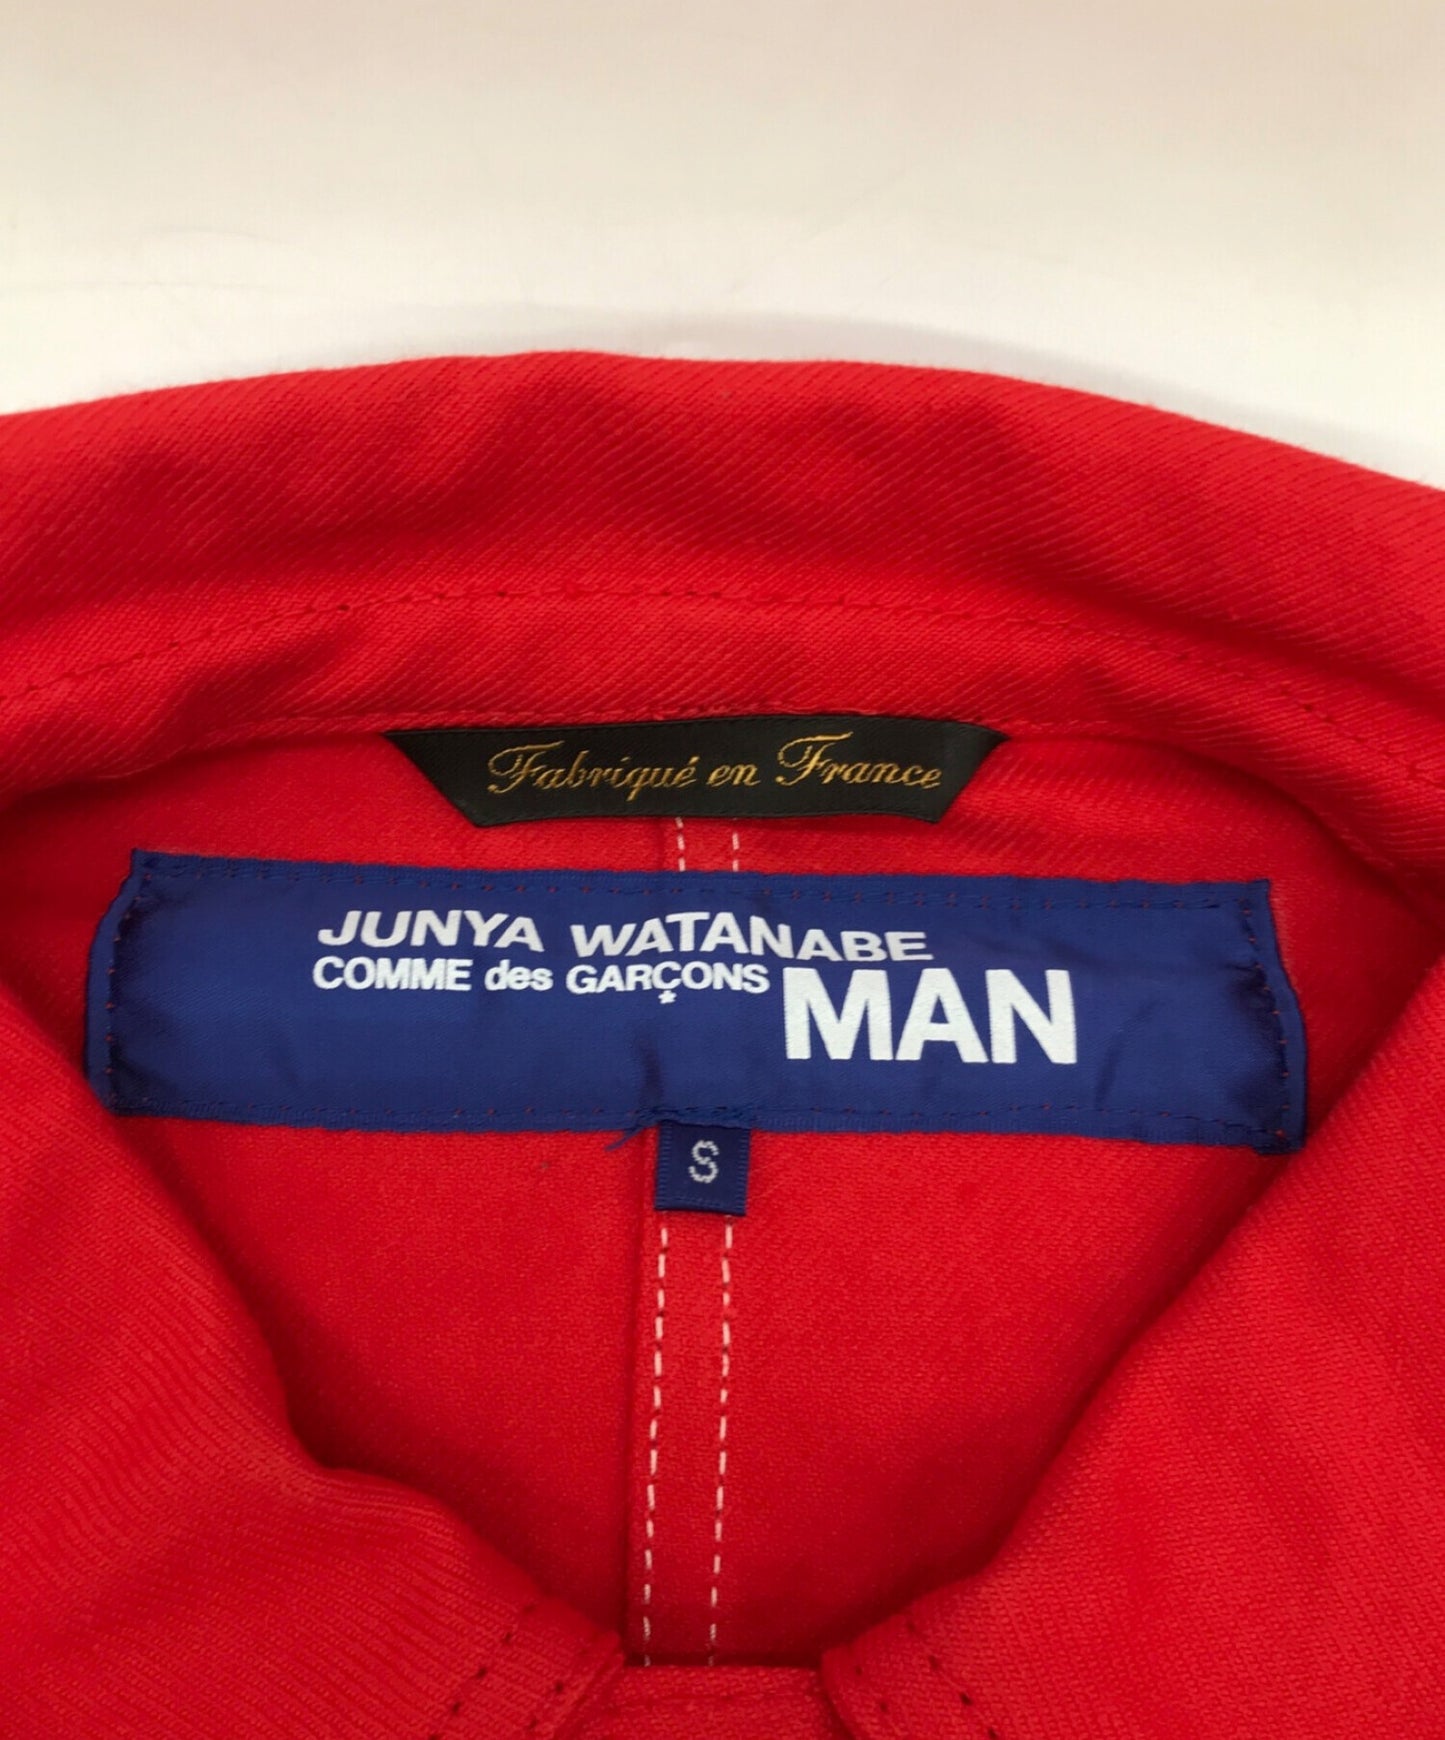 COMME des GARCONS JUNYA WATANABE MAN Cotton Serge Jacket Jacket WE-J402